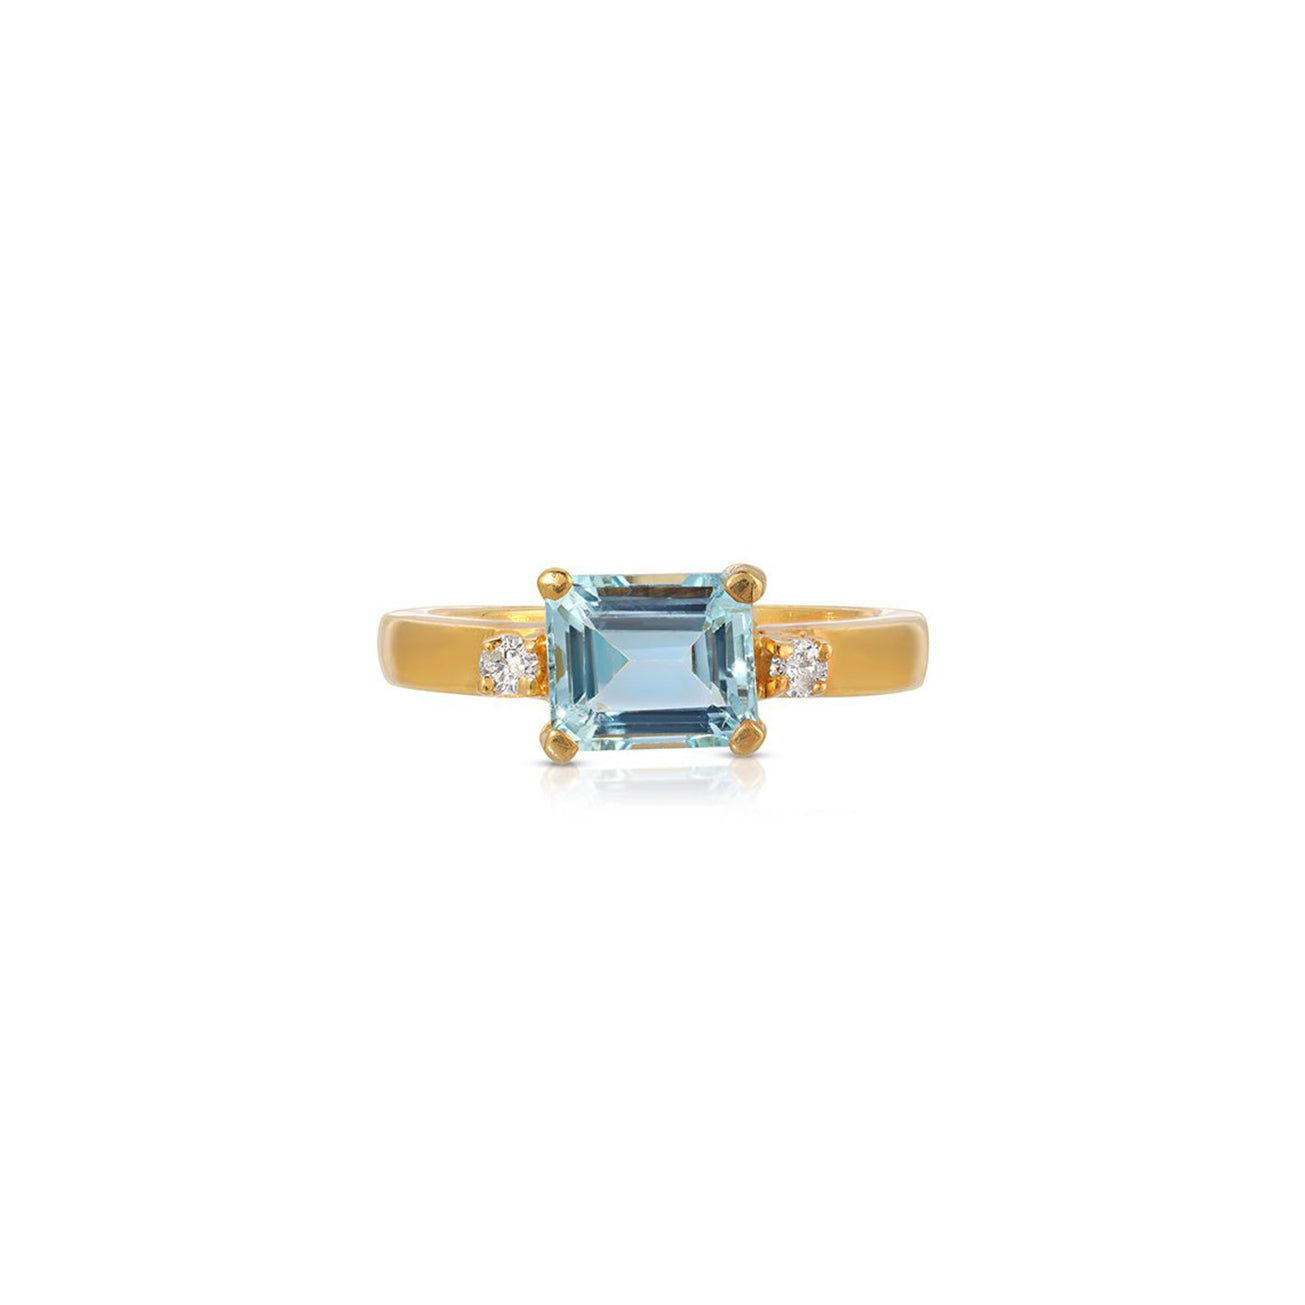 Aqua Emerald Cut Diamond Ring